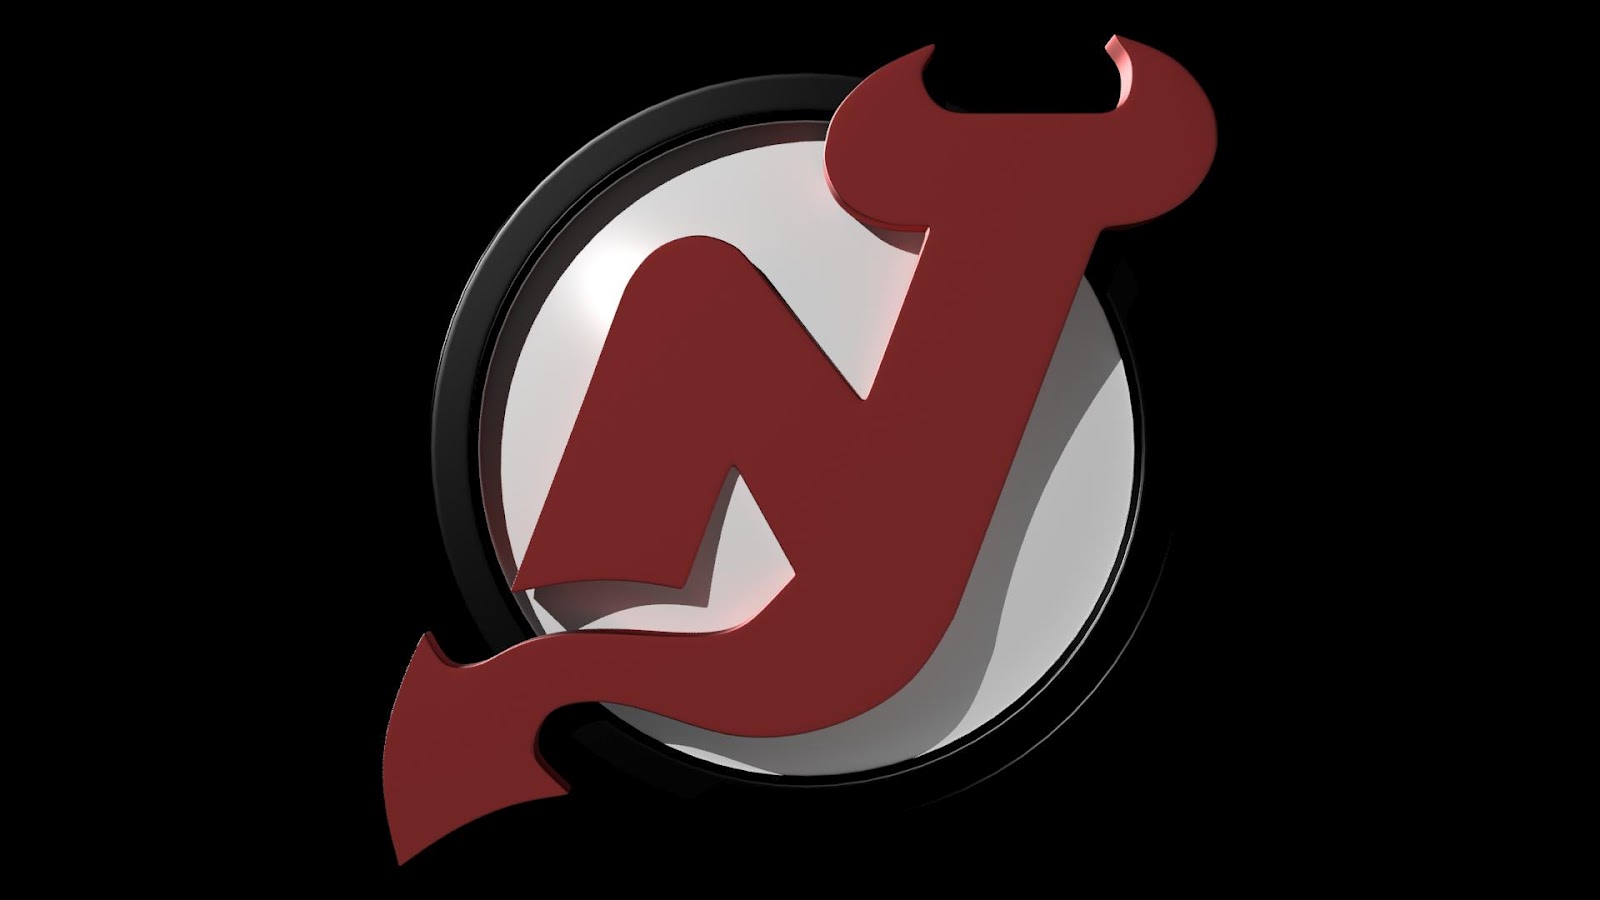 New jersey devils. Нью джерси Девилз. Нью-джерси Дэвилз logo. Нью джерси НХЛ логотип. New Jersey Devils логотип.